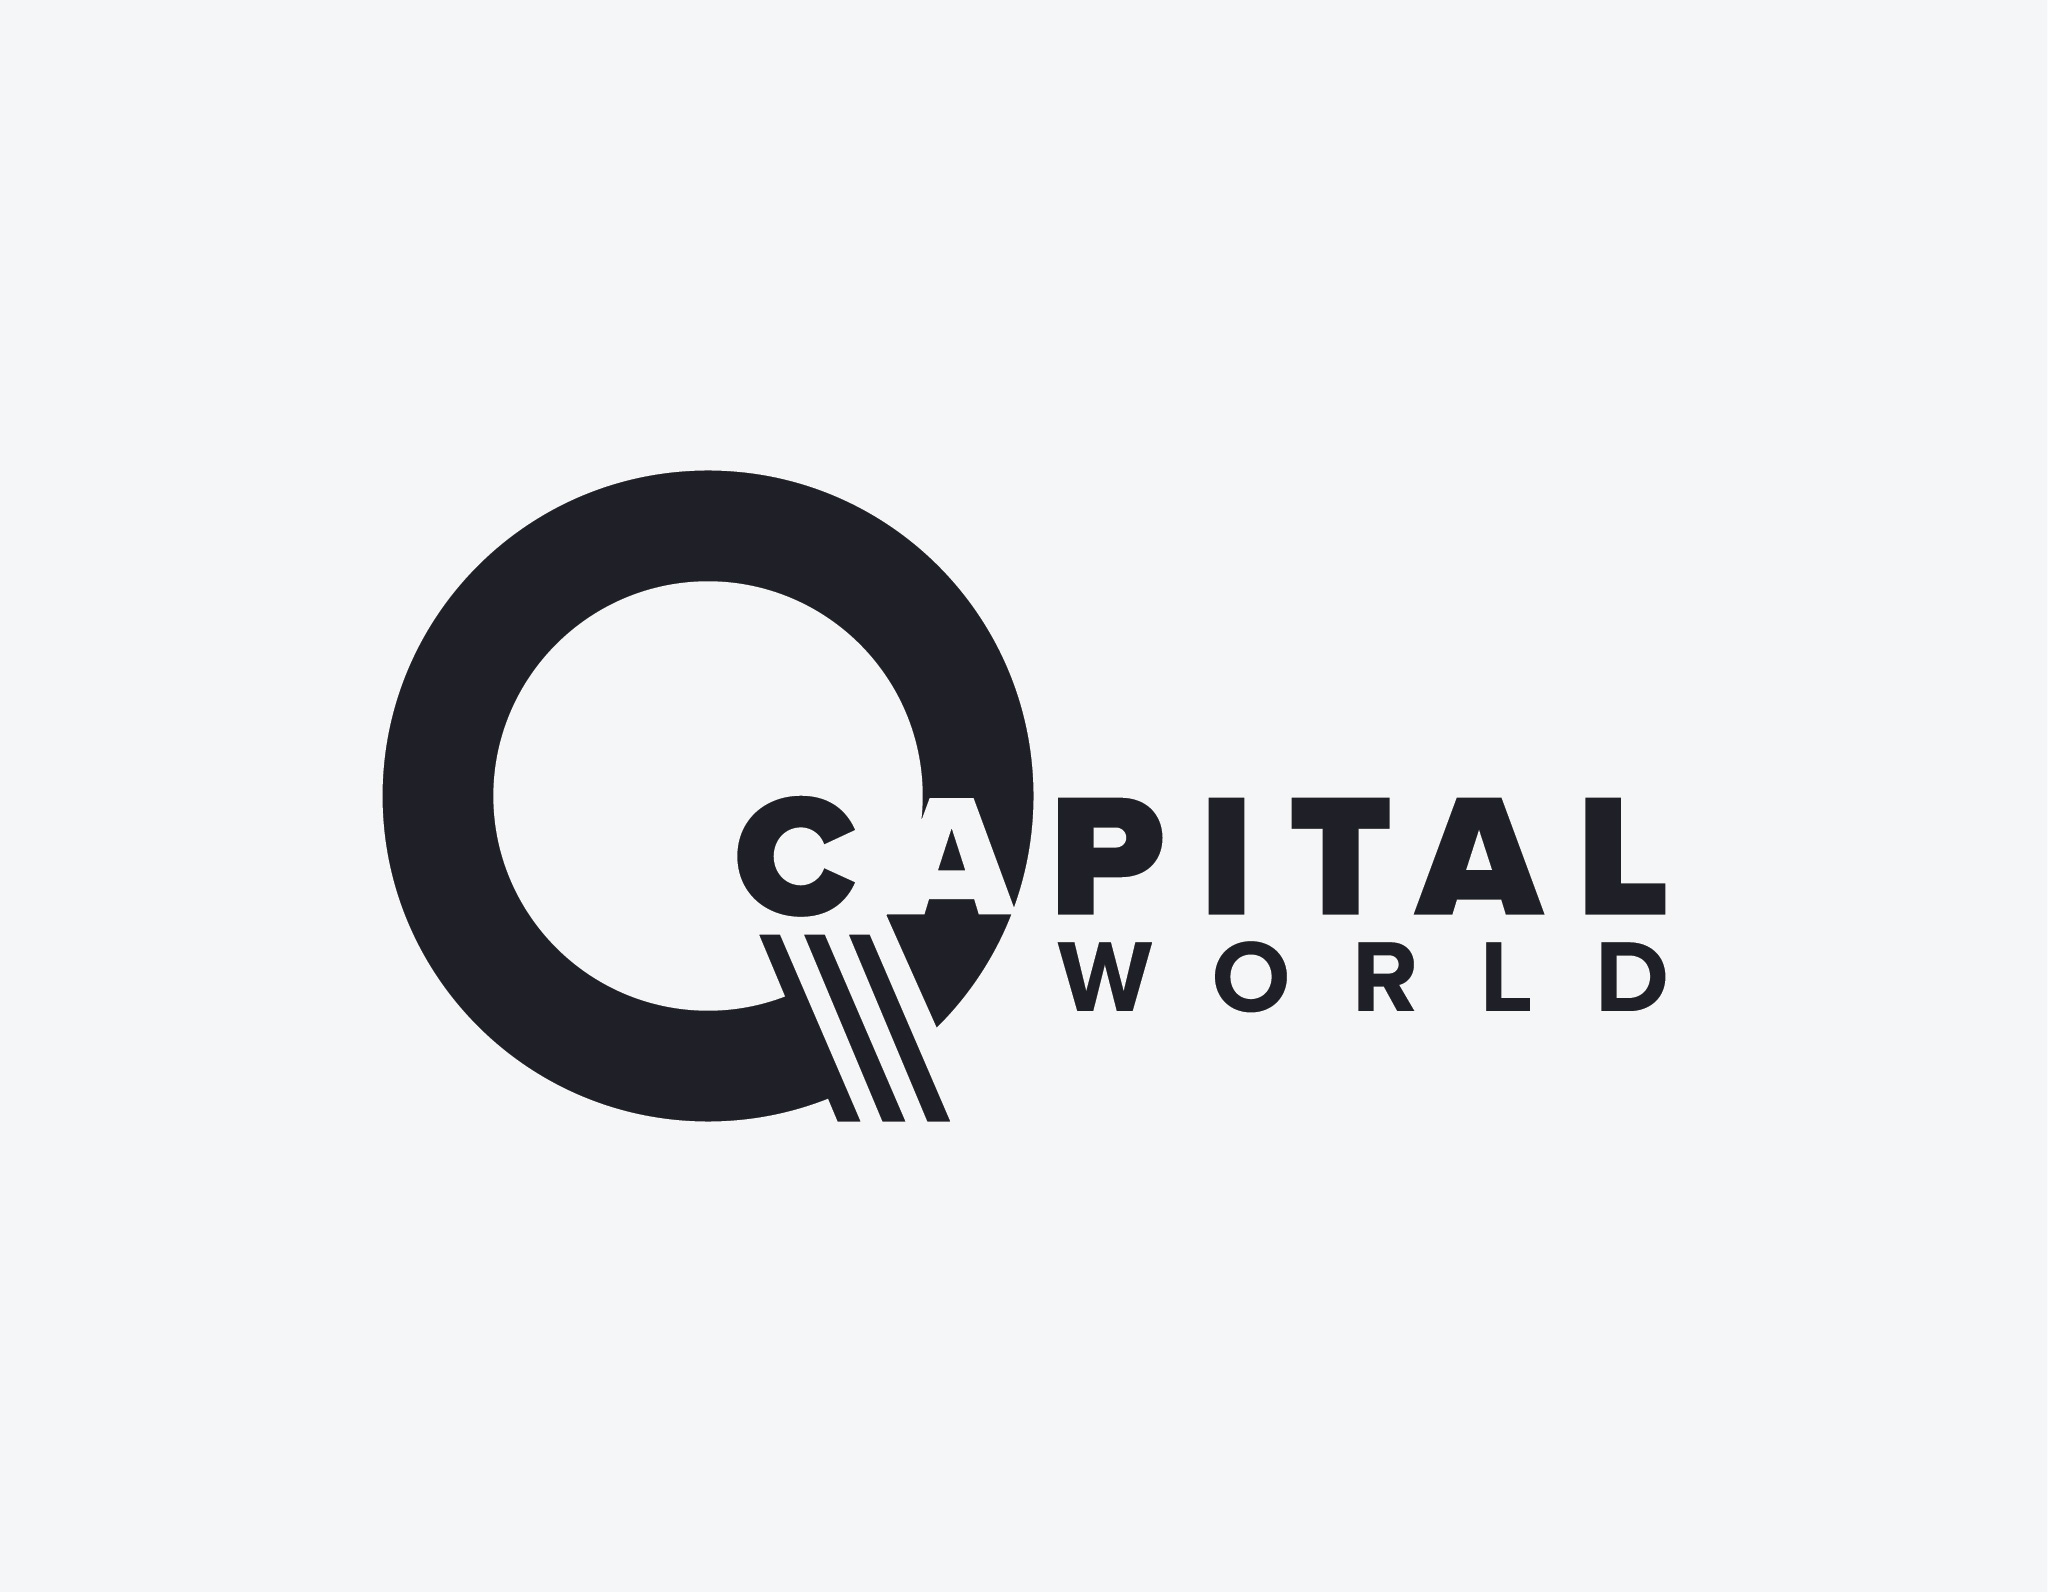 Q Capital World logo